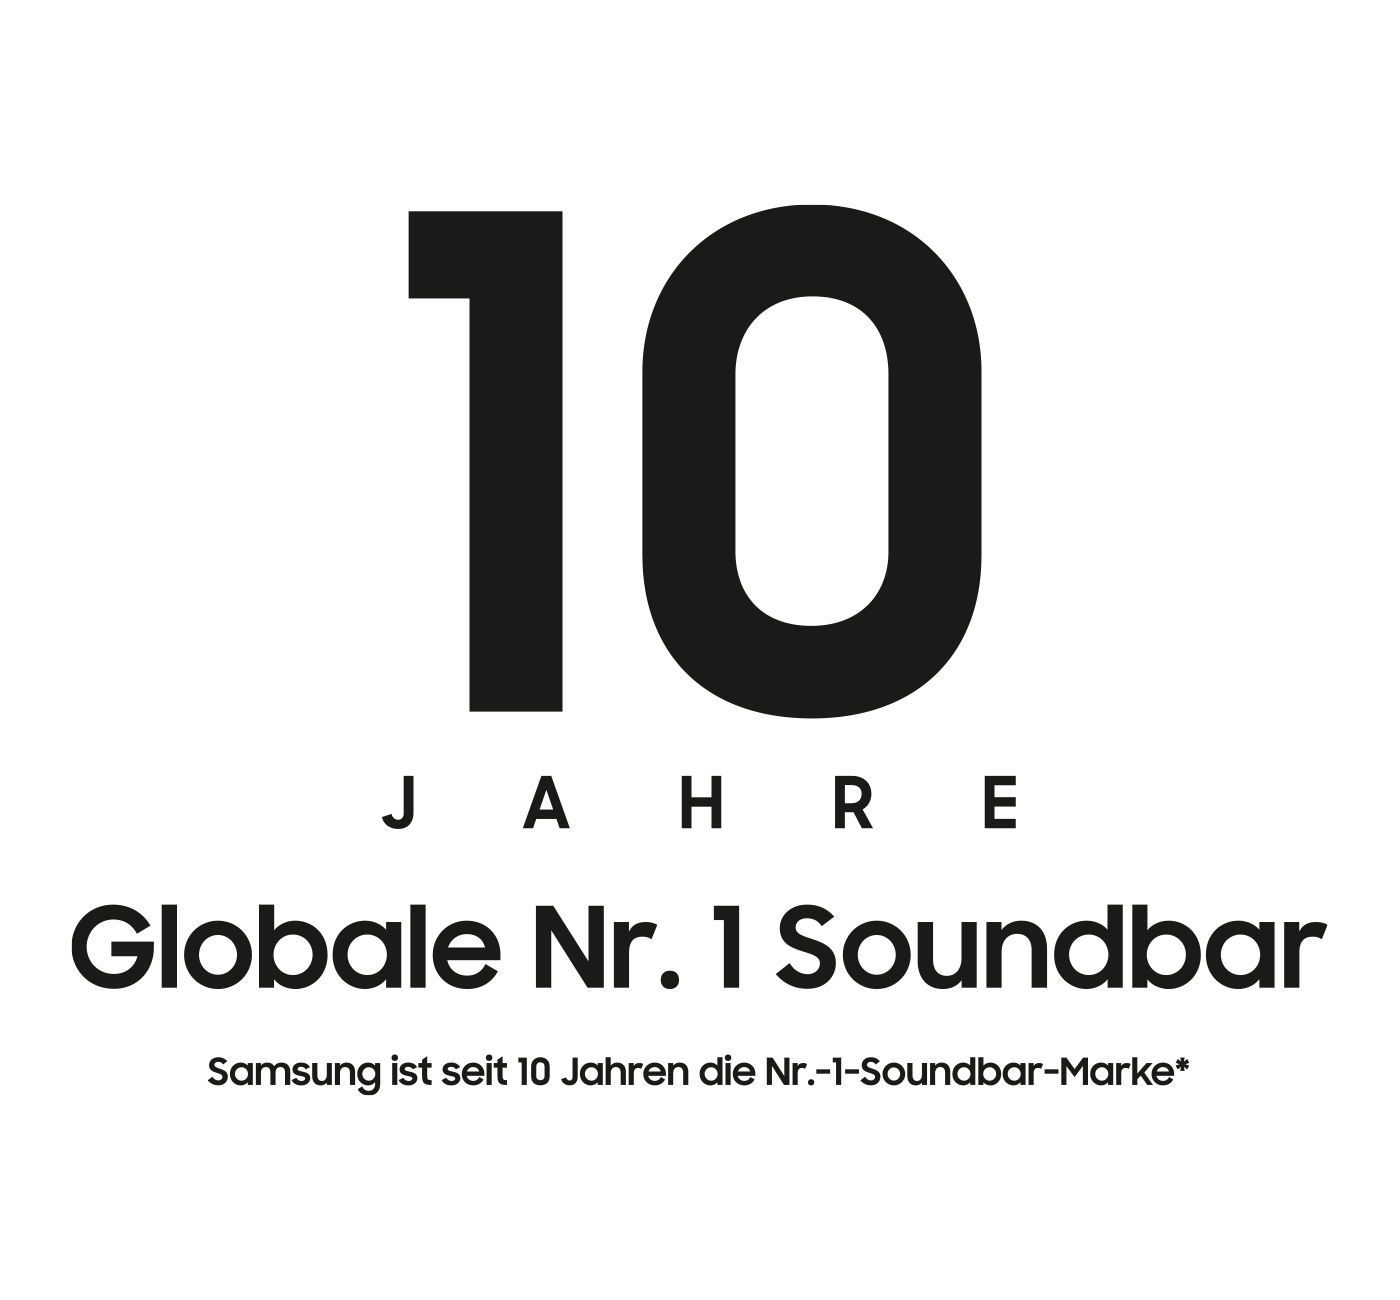 10 Jahre Globale Nr. 1 Soundbar